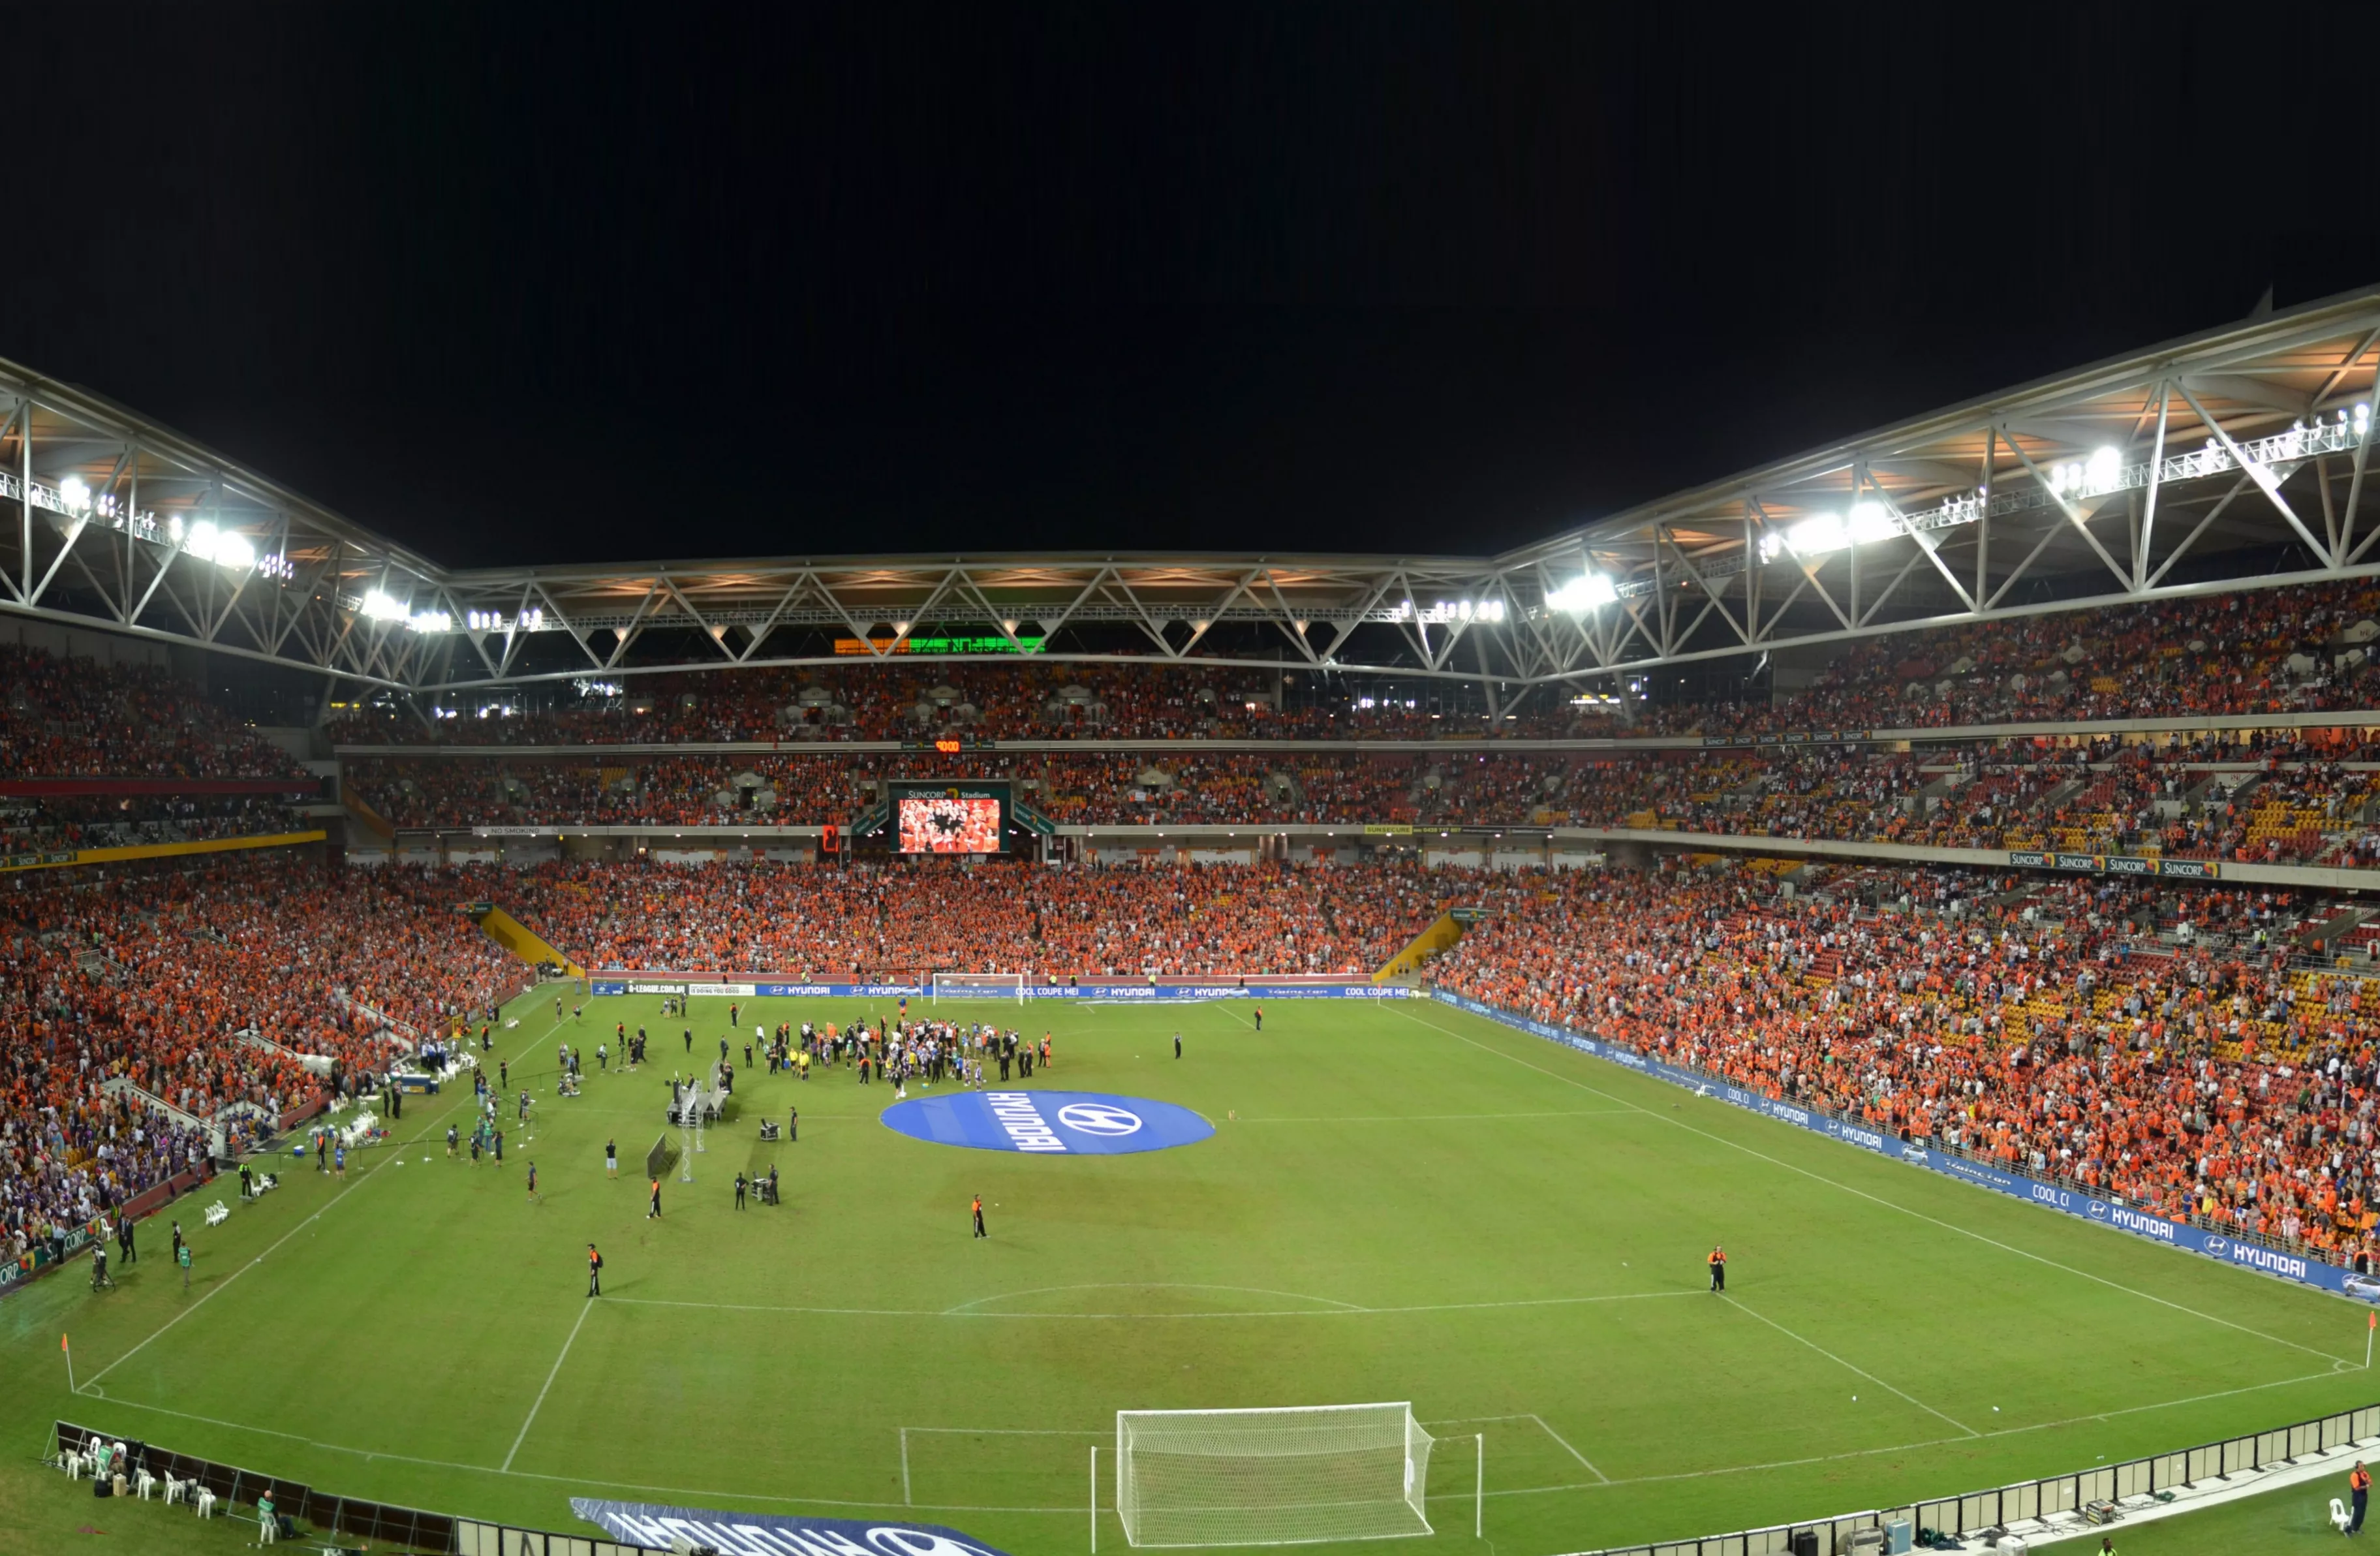 Suncorp Stadium in Australia, Australia and Oceania | Football - Rated 4